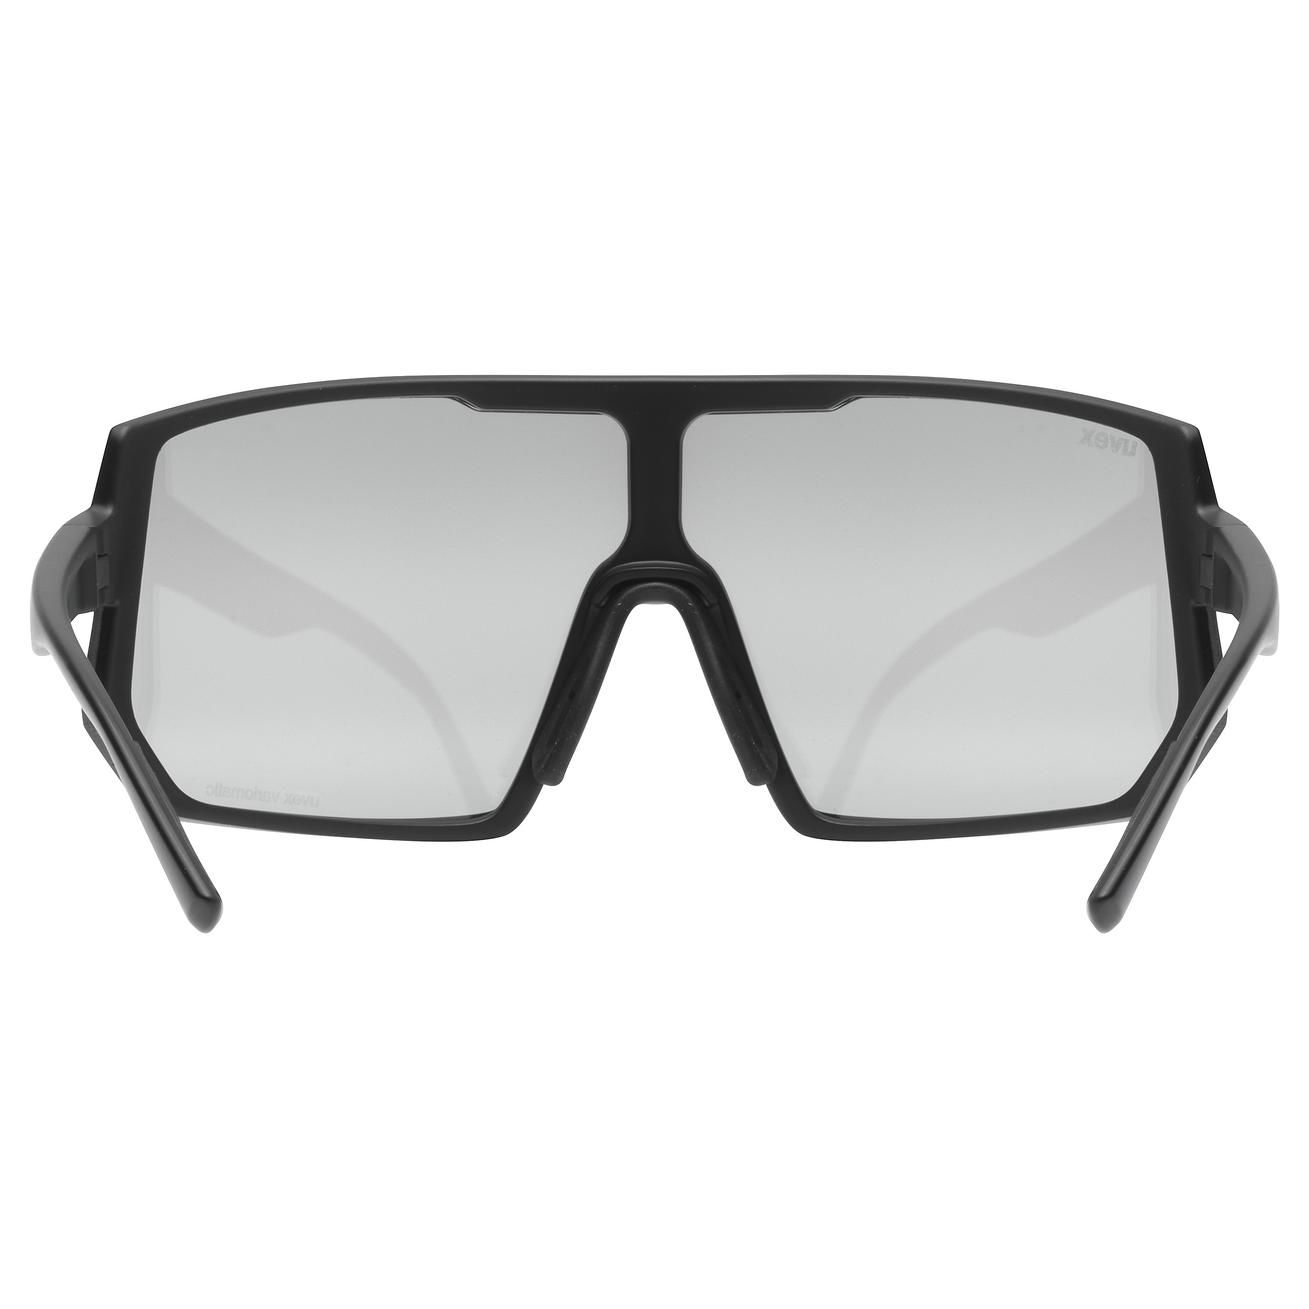 slnečné okuliare uvex sportstyle 235 V black mat silver s1-3